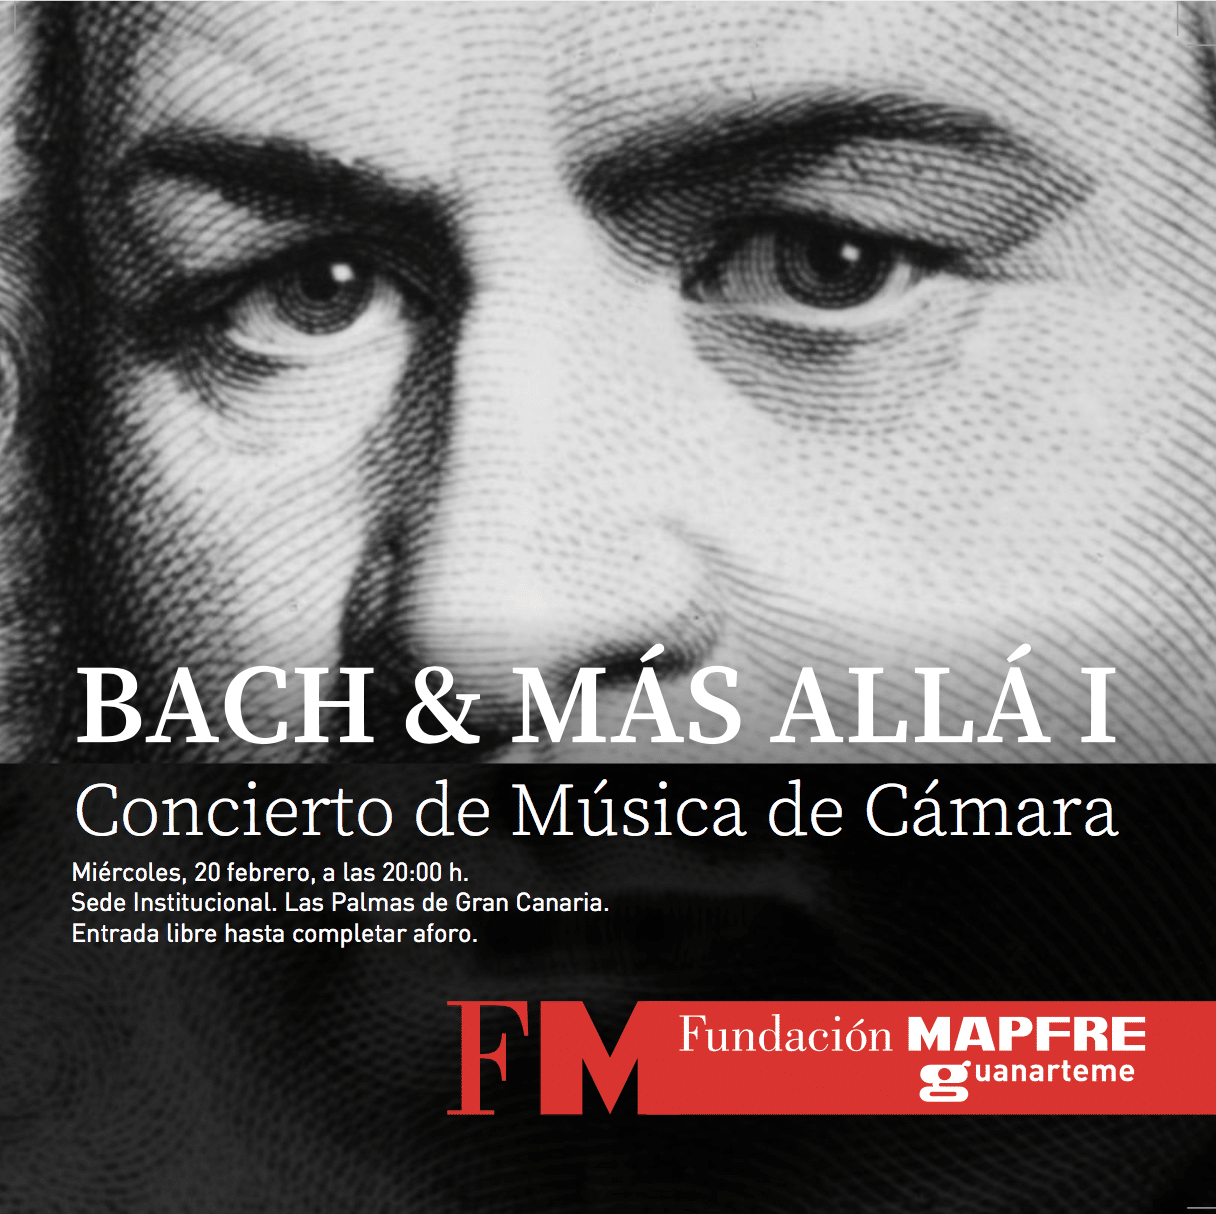 Bach & más allá I